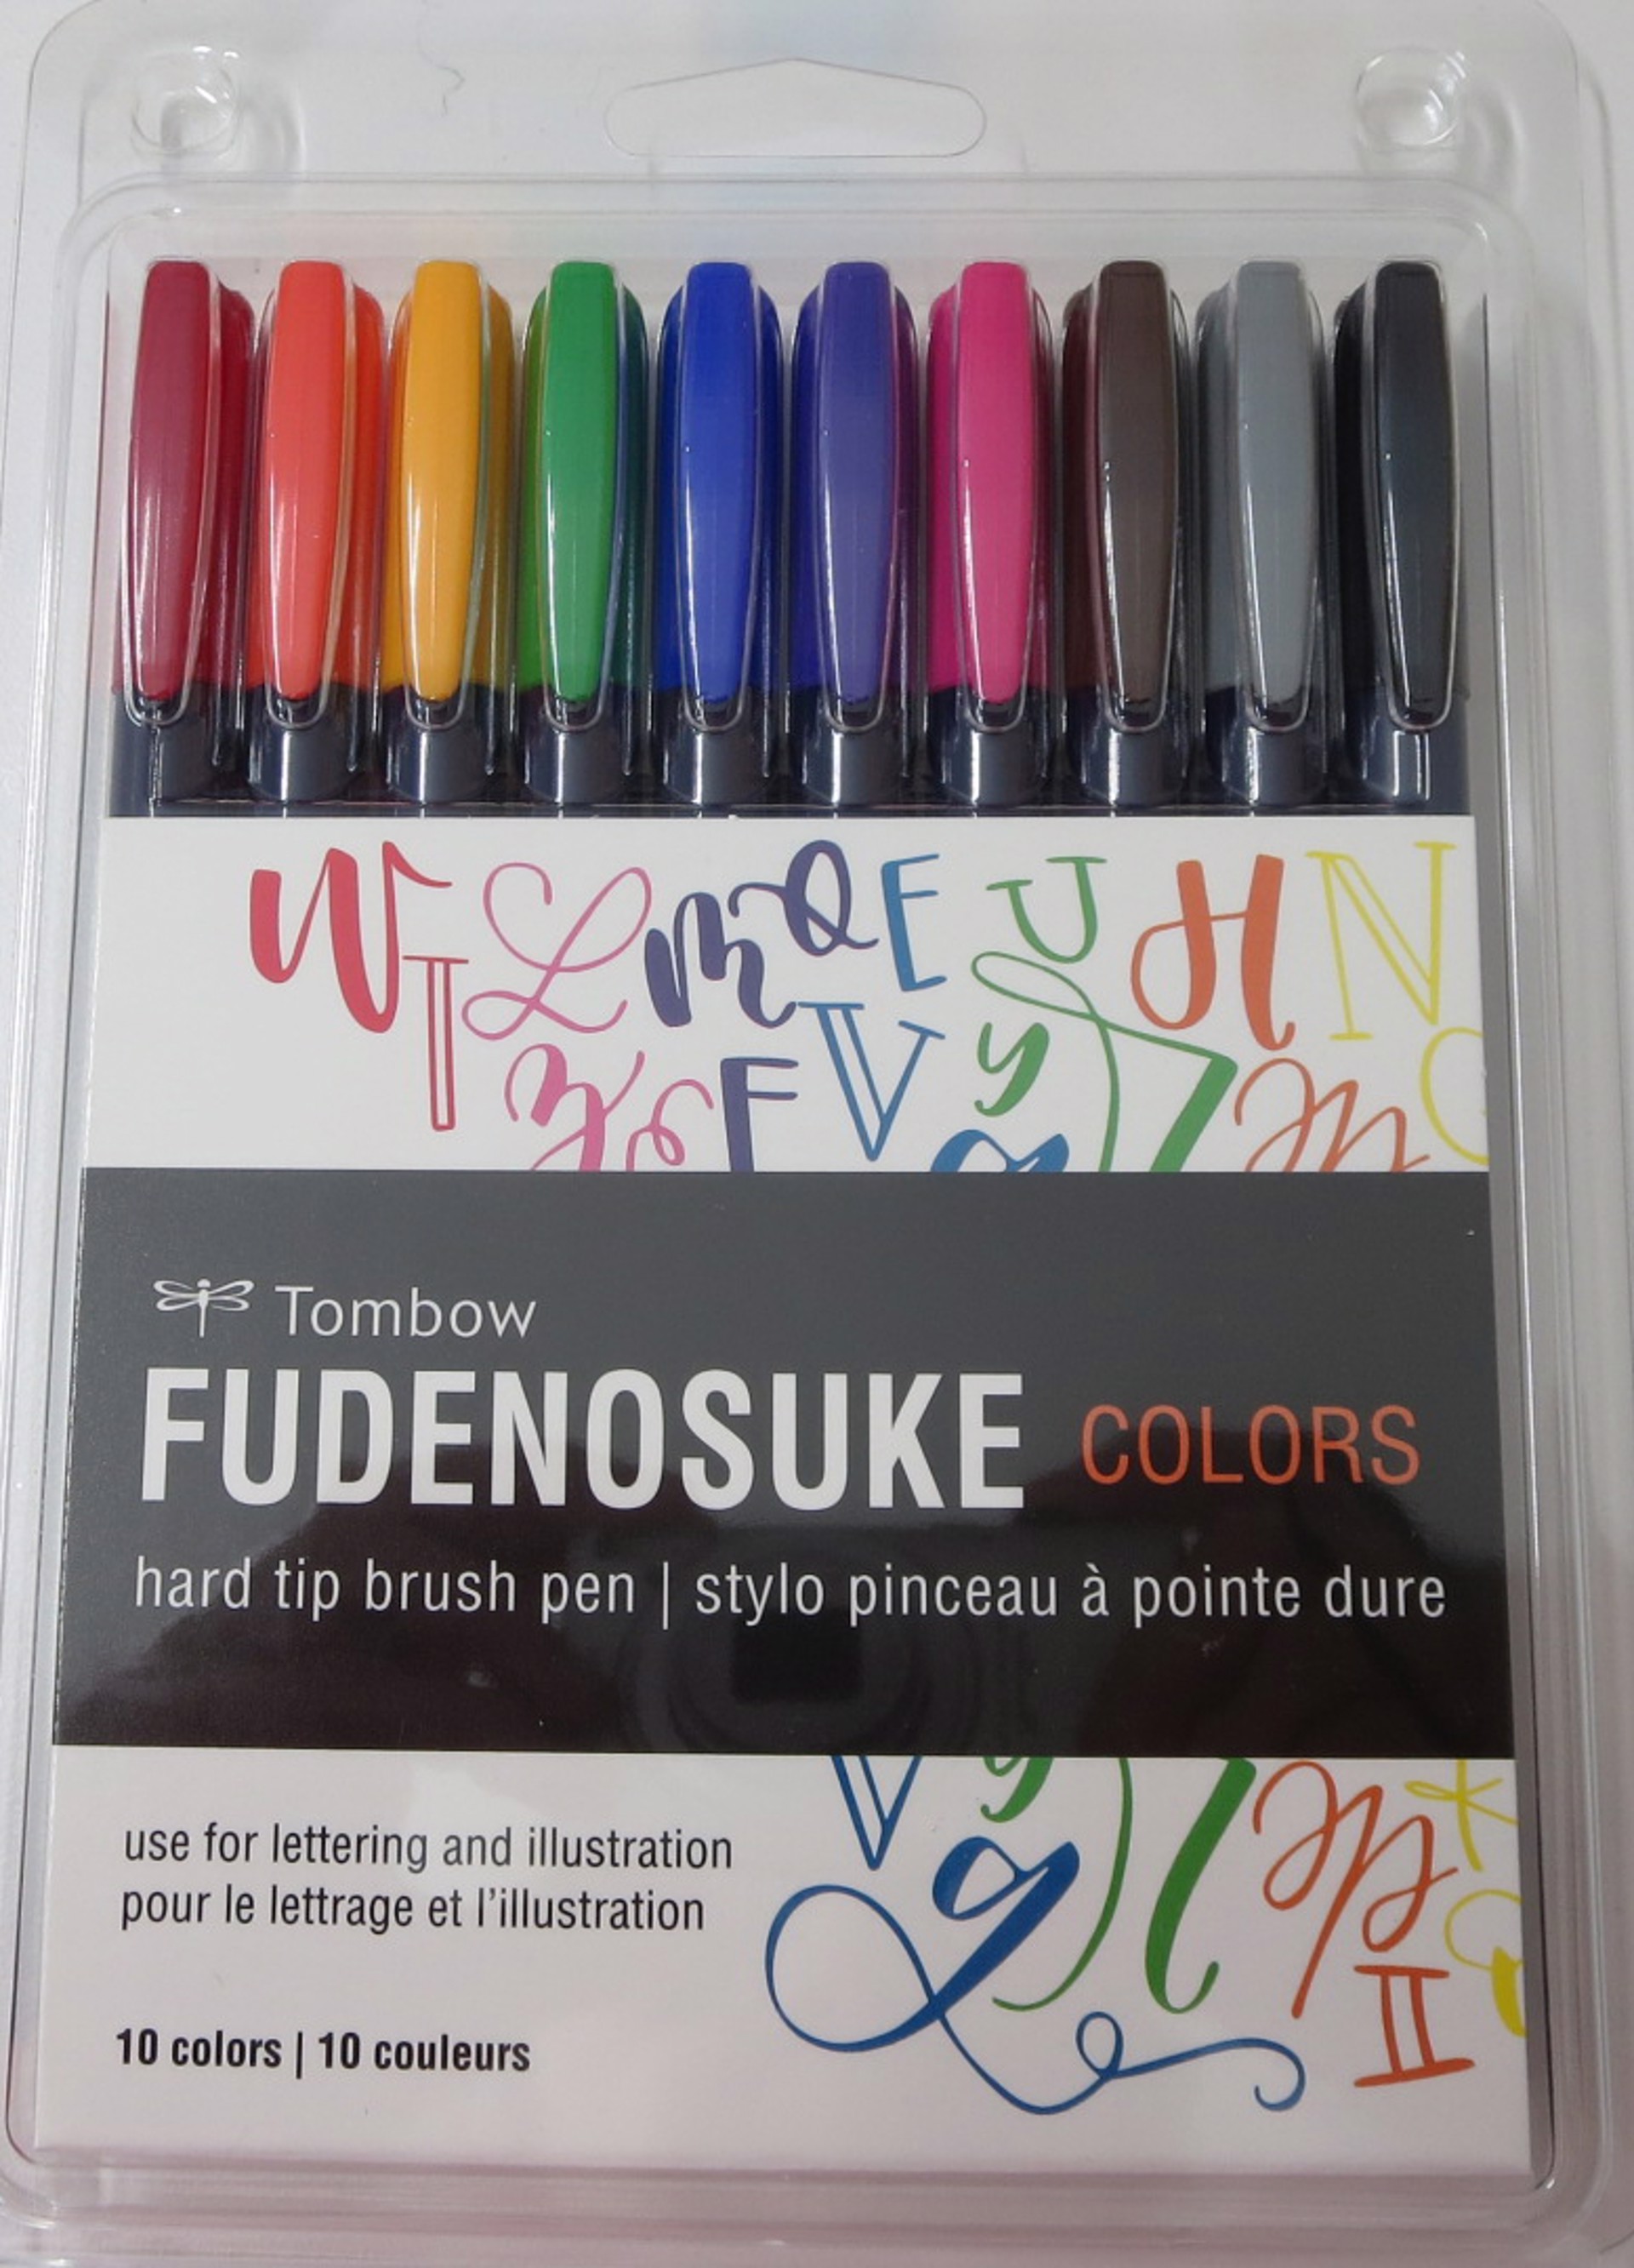 Tombow Fudenosuke Brush pen set by Gift Shop